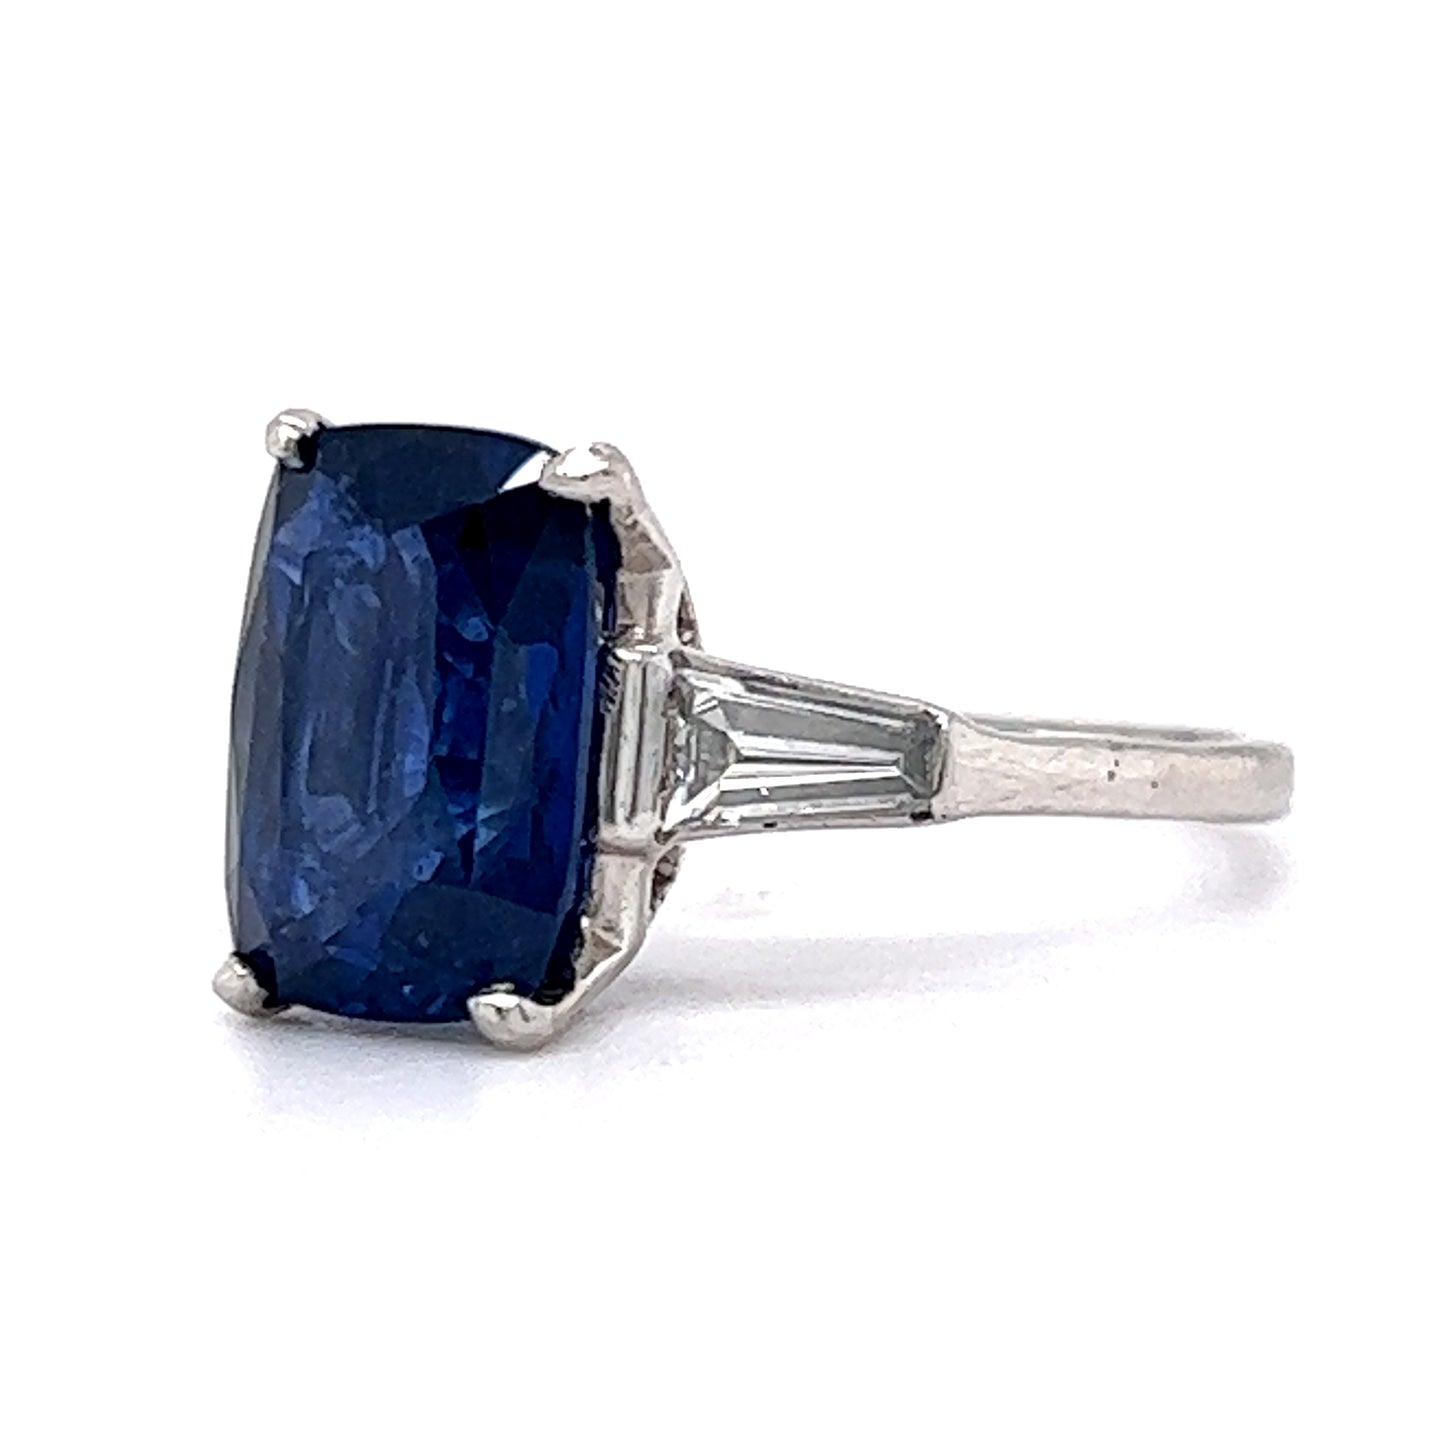 4 Carat Cushion Cut Sapphire Engagement Ring in Platinum